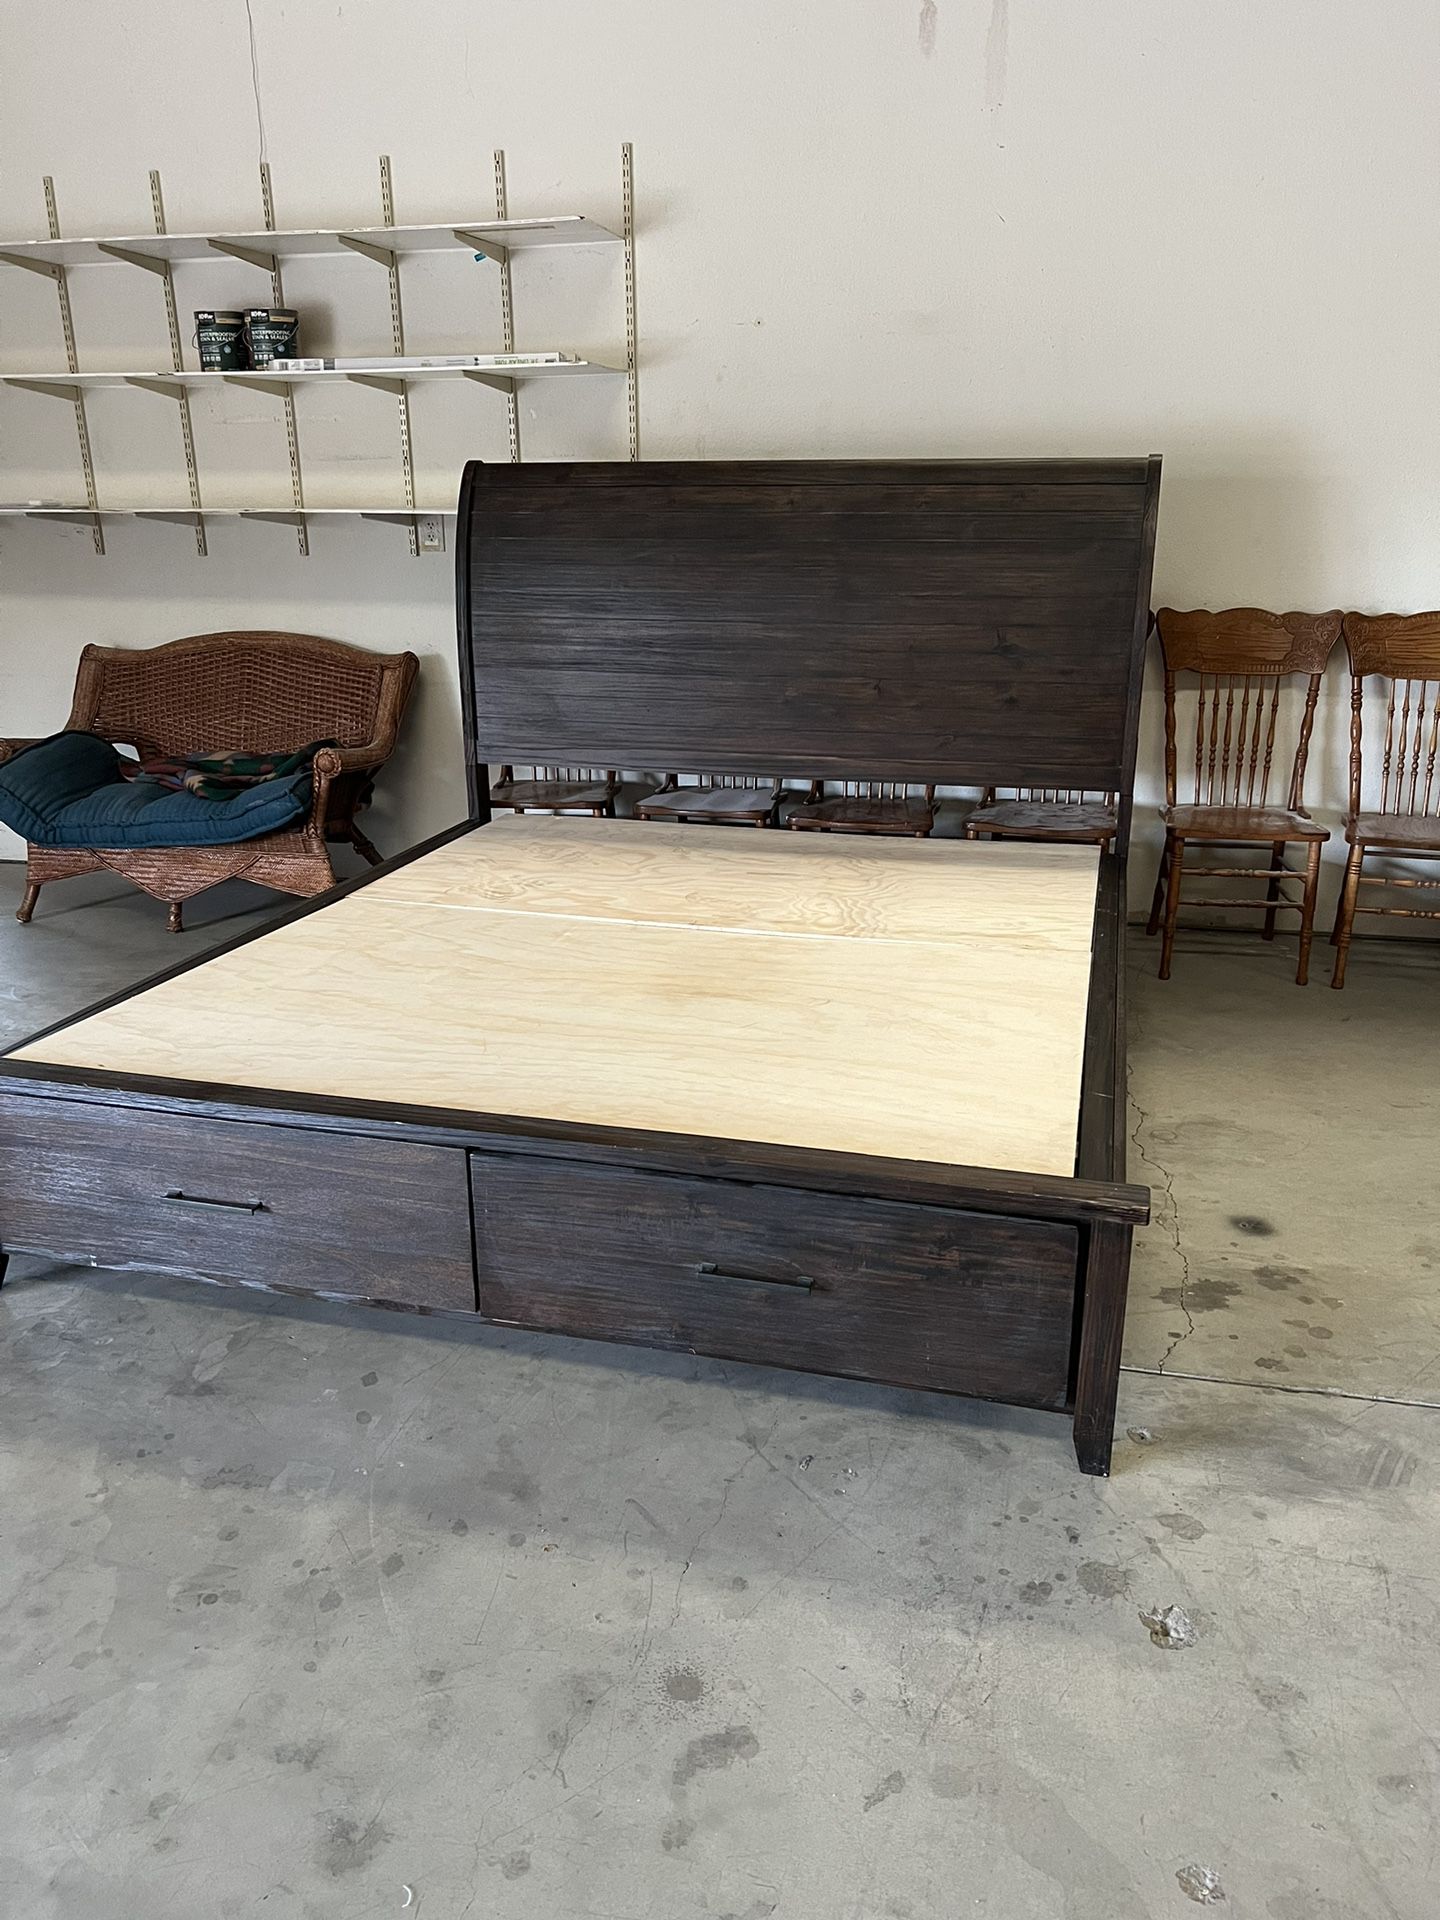 Cal King Bed Frame